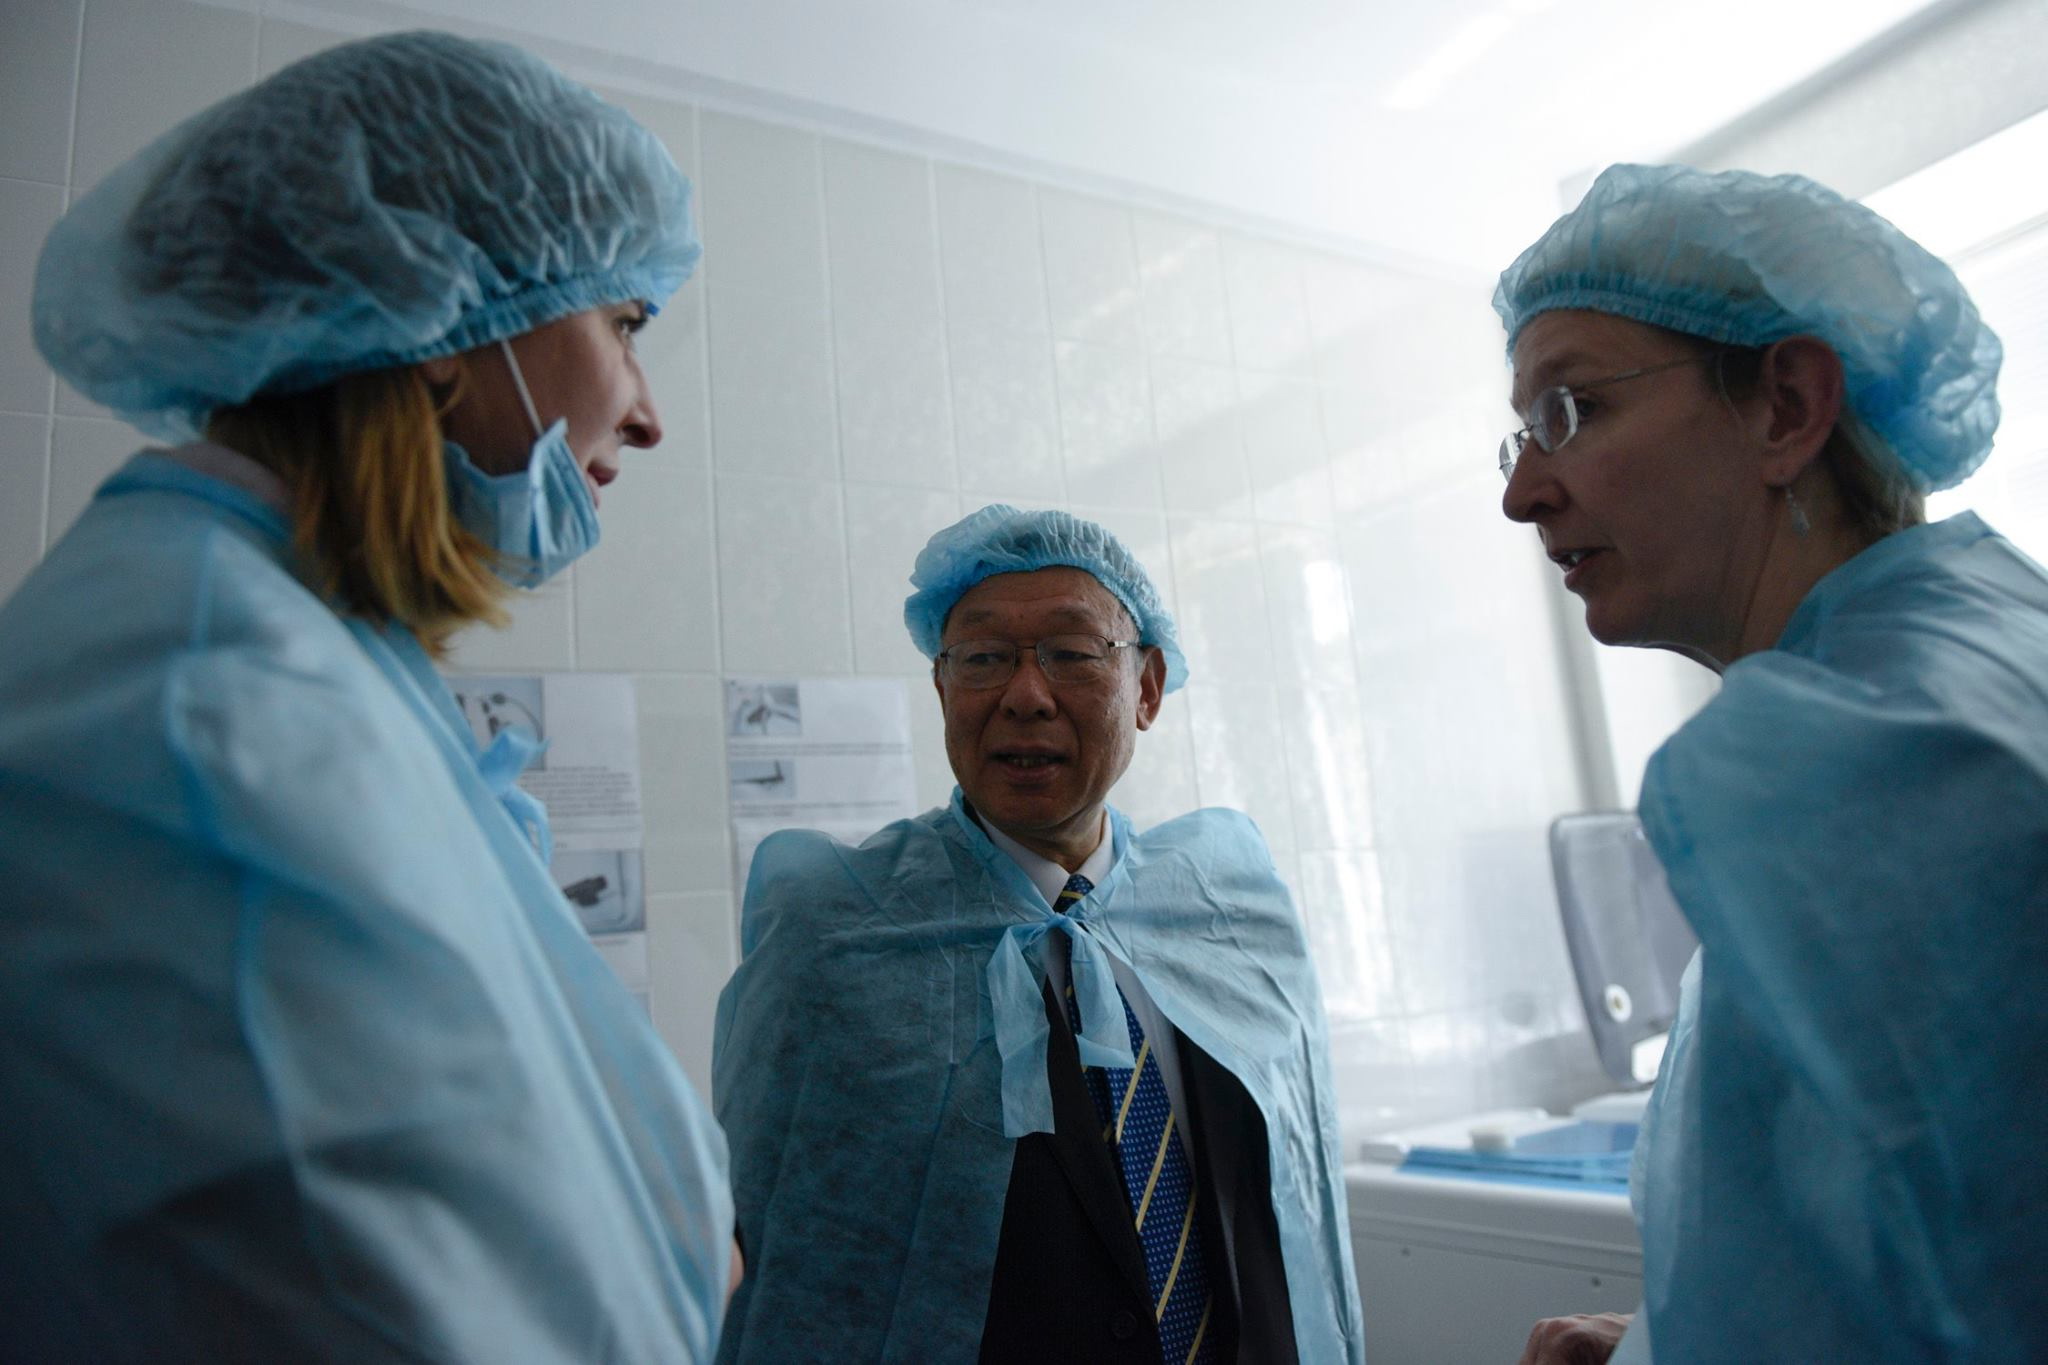 Ulyana Suprun and Japanese Ambassadori Sumi Shigeki visited Kiev region hospital